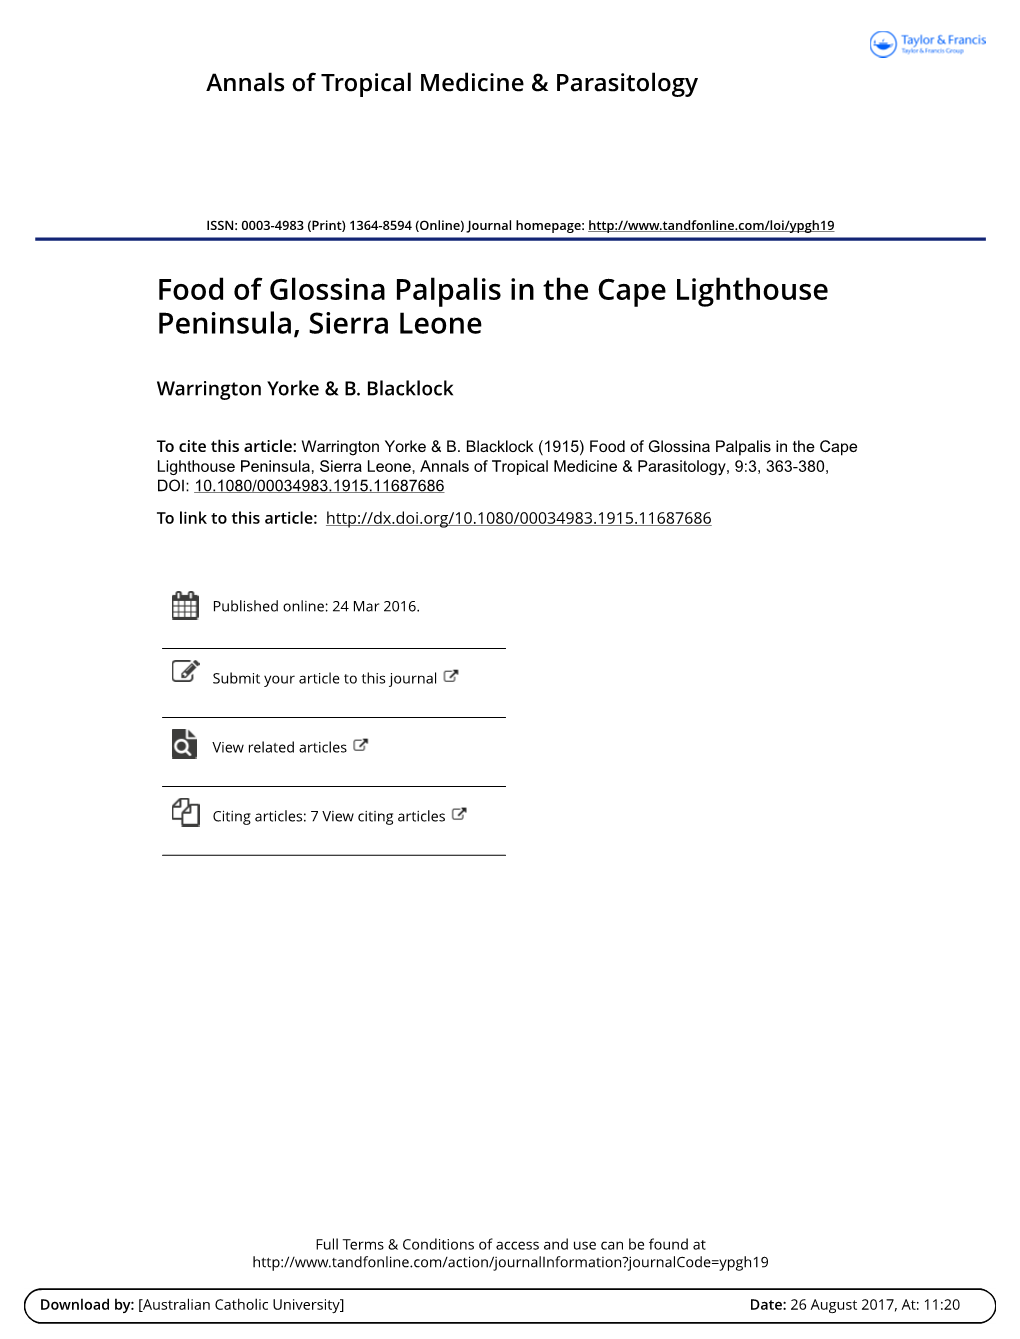 Food of Glossina Palpalis in the Cape Lighthouse Peninsula, Sierra Leone